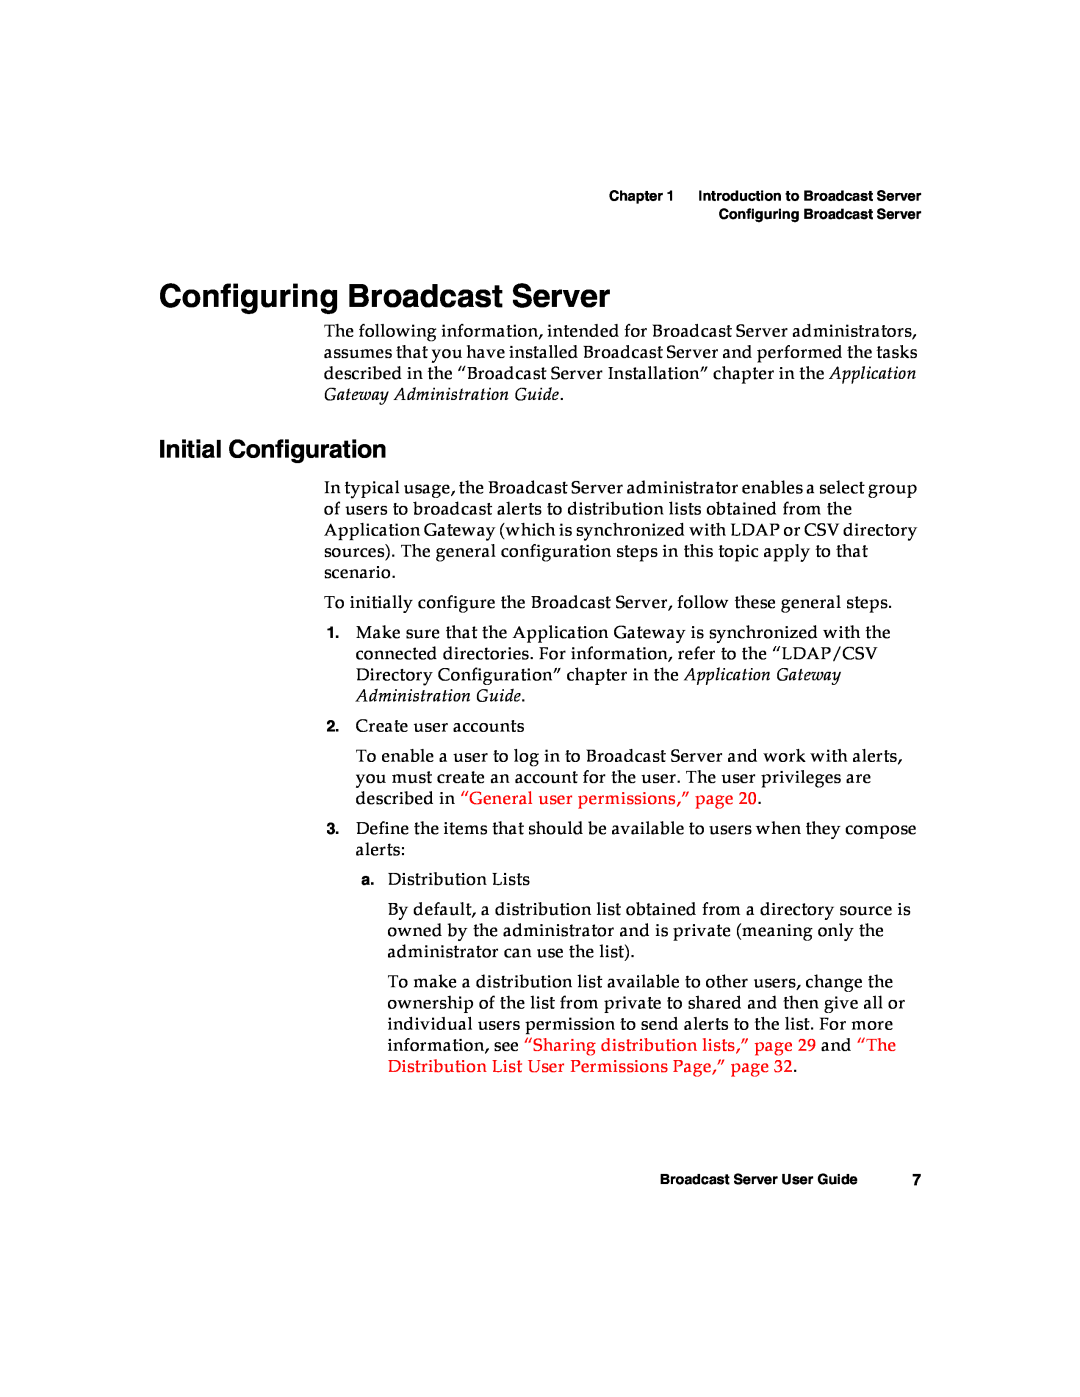 Nortel Networks warranty Configuring Broadcast Server, Initial Configuration 